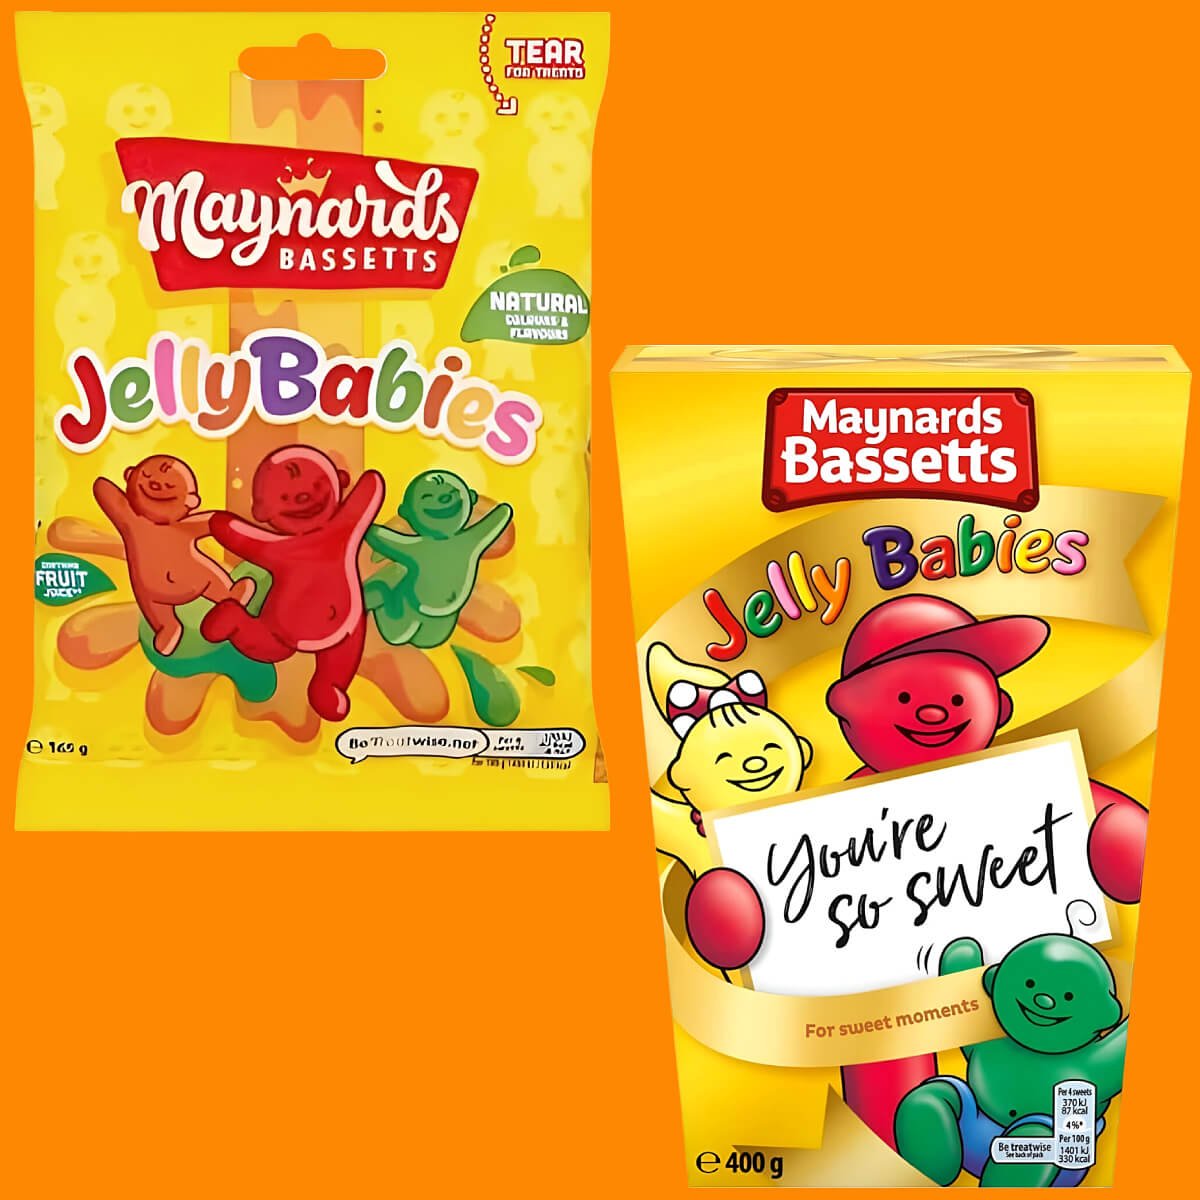 Box and share bag of Maynards Bassetts Jelly Babies with orange background